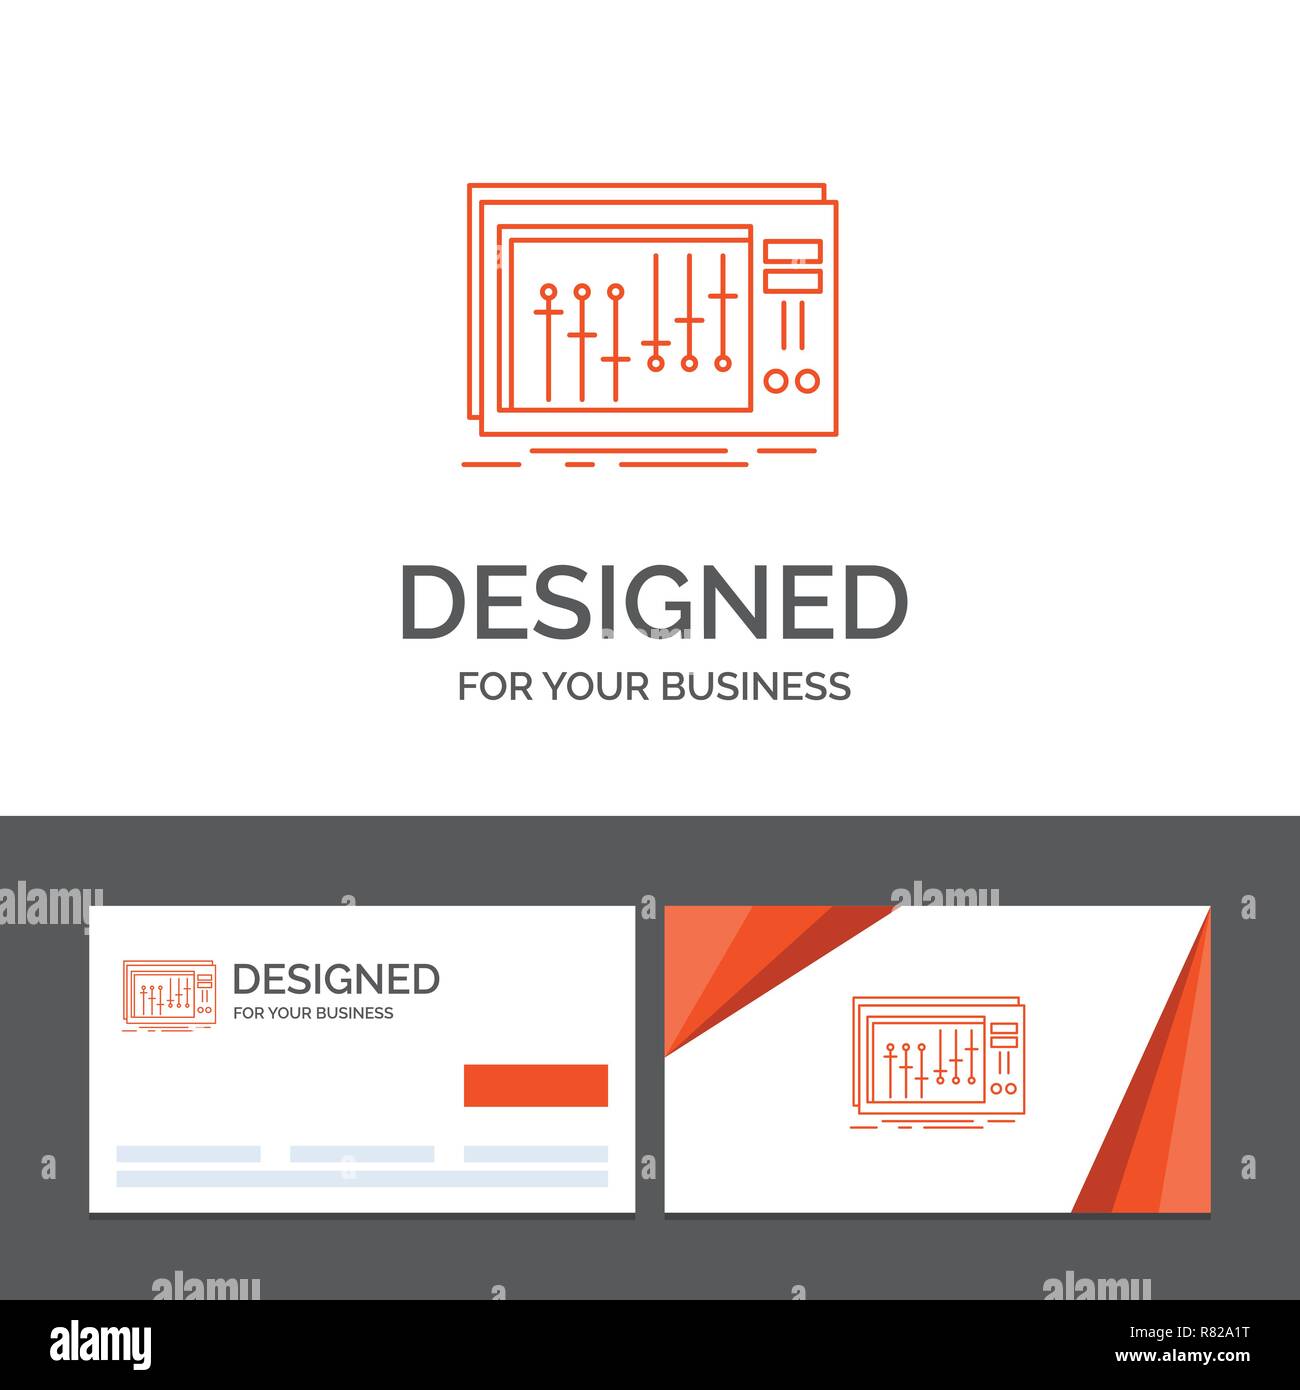 Business Logo Vorlage Fur Konsole Dj Mixer Musik Studio Orange Visitenkarten Mit Logo Vorlage Stock Vektorgrafik Alamy